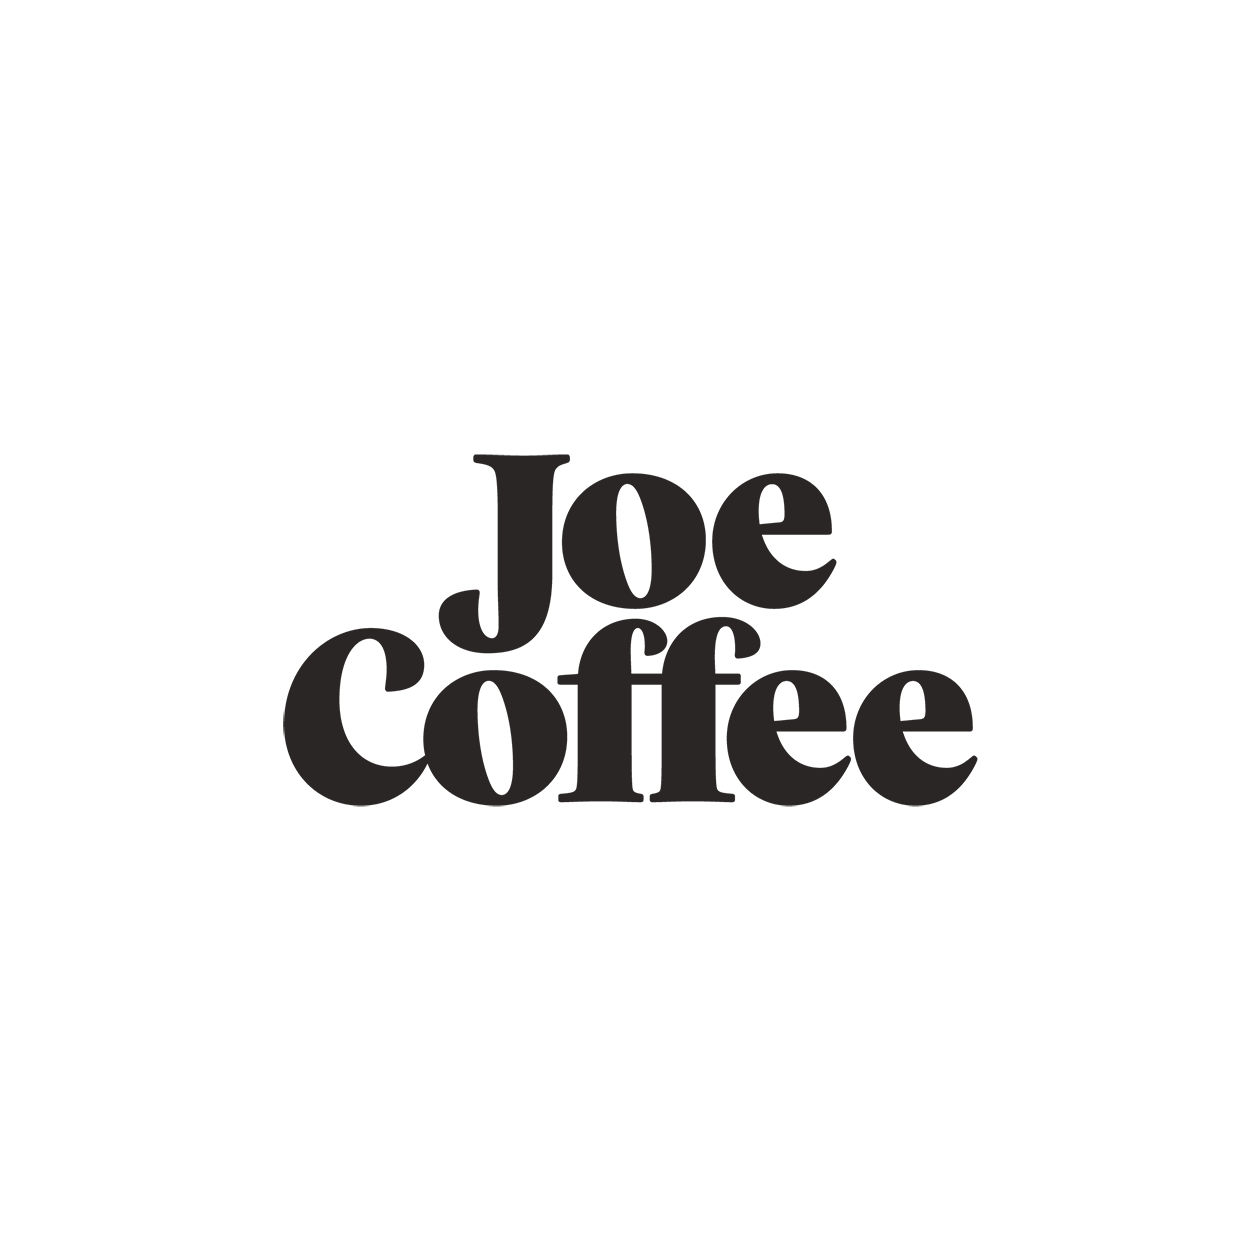 Joe Coffee